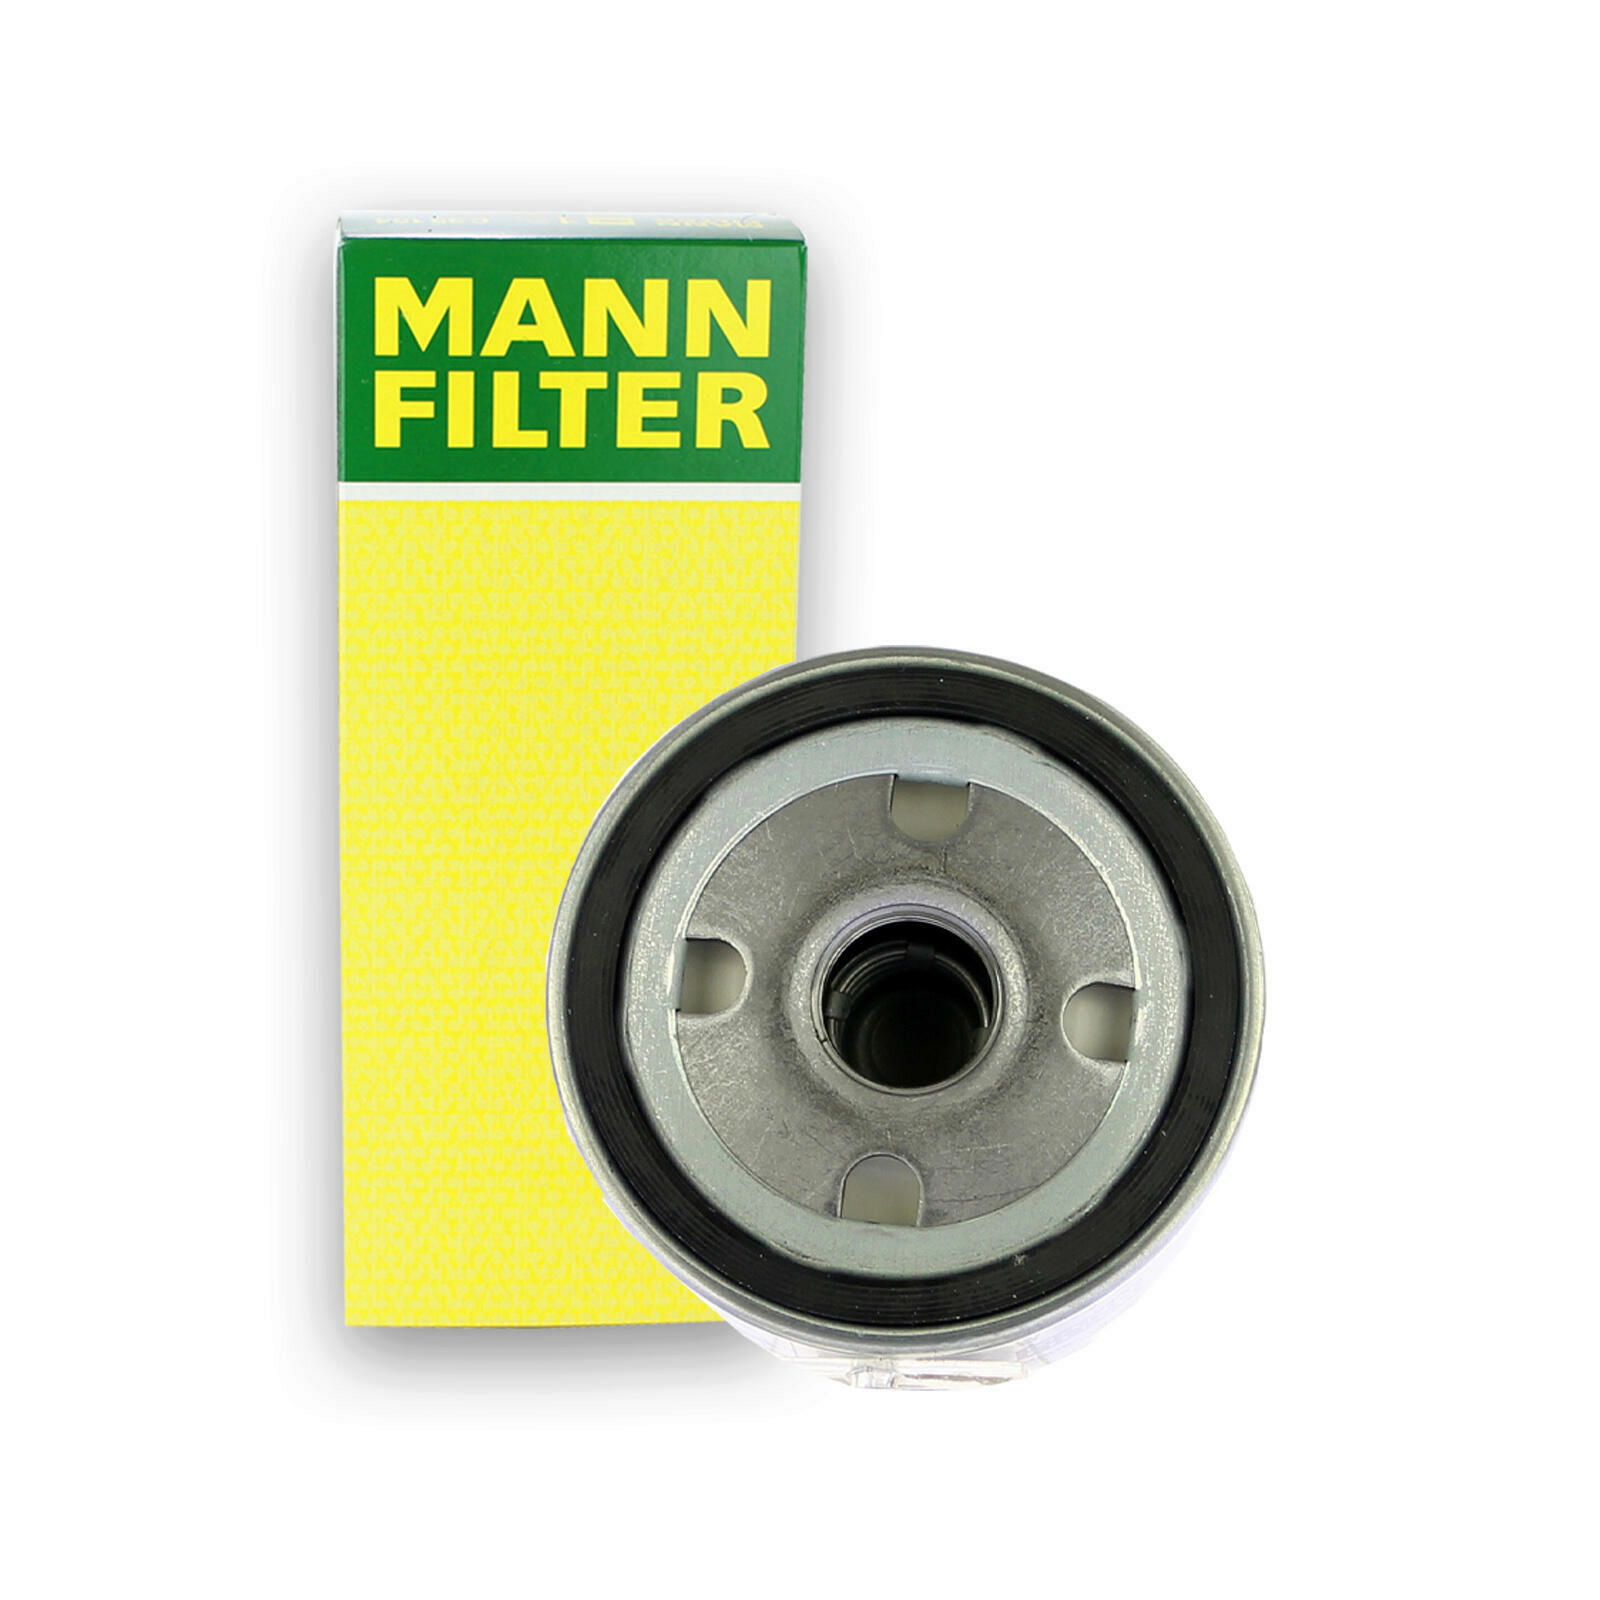 Mannol Inspektionskit Motoröl + MANN Ölfilter + Ablassschraube